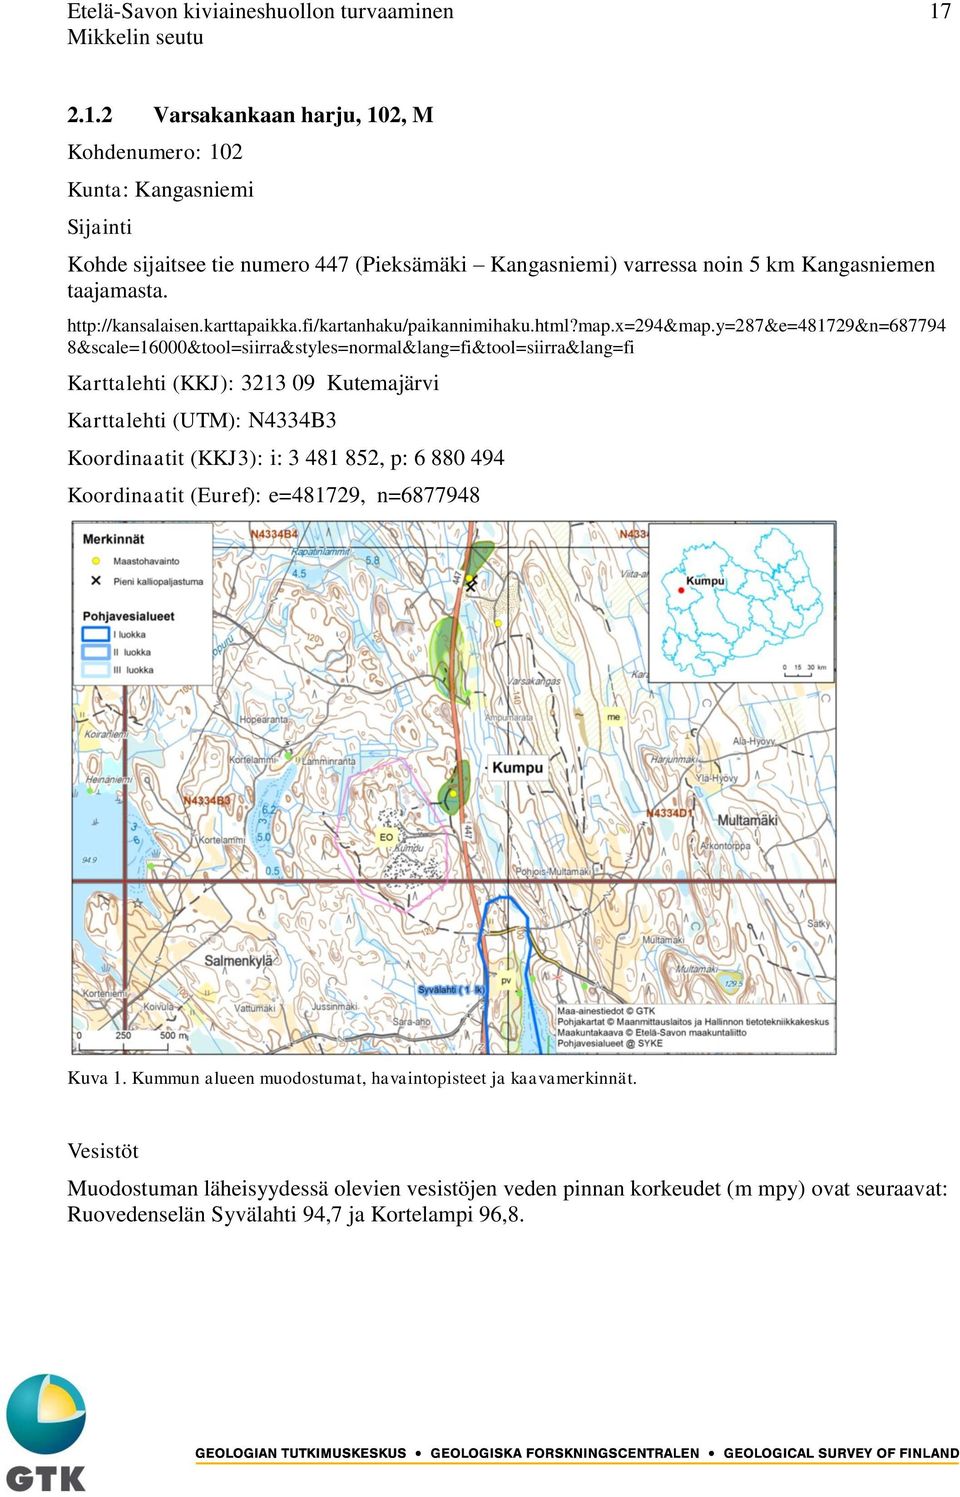 http://kansalaisen.karttapaikka.fi/kartanhaku/paikannimihaku.html?map.x=294&map.